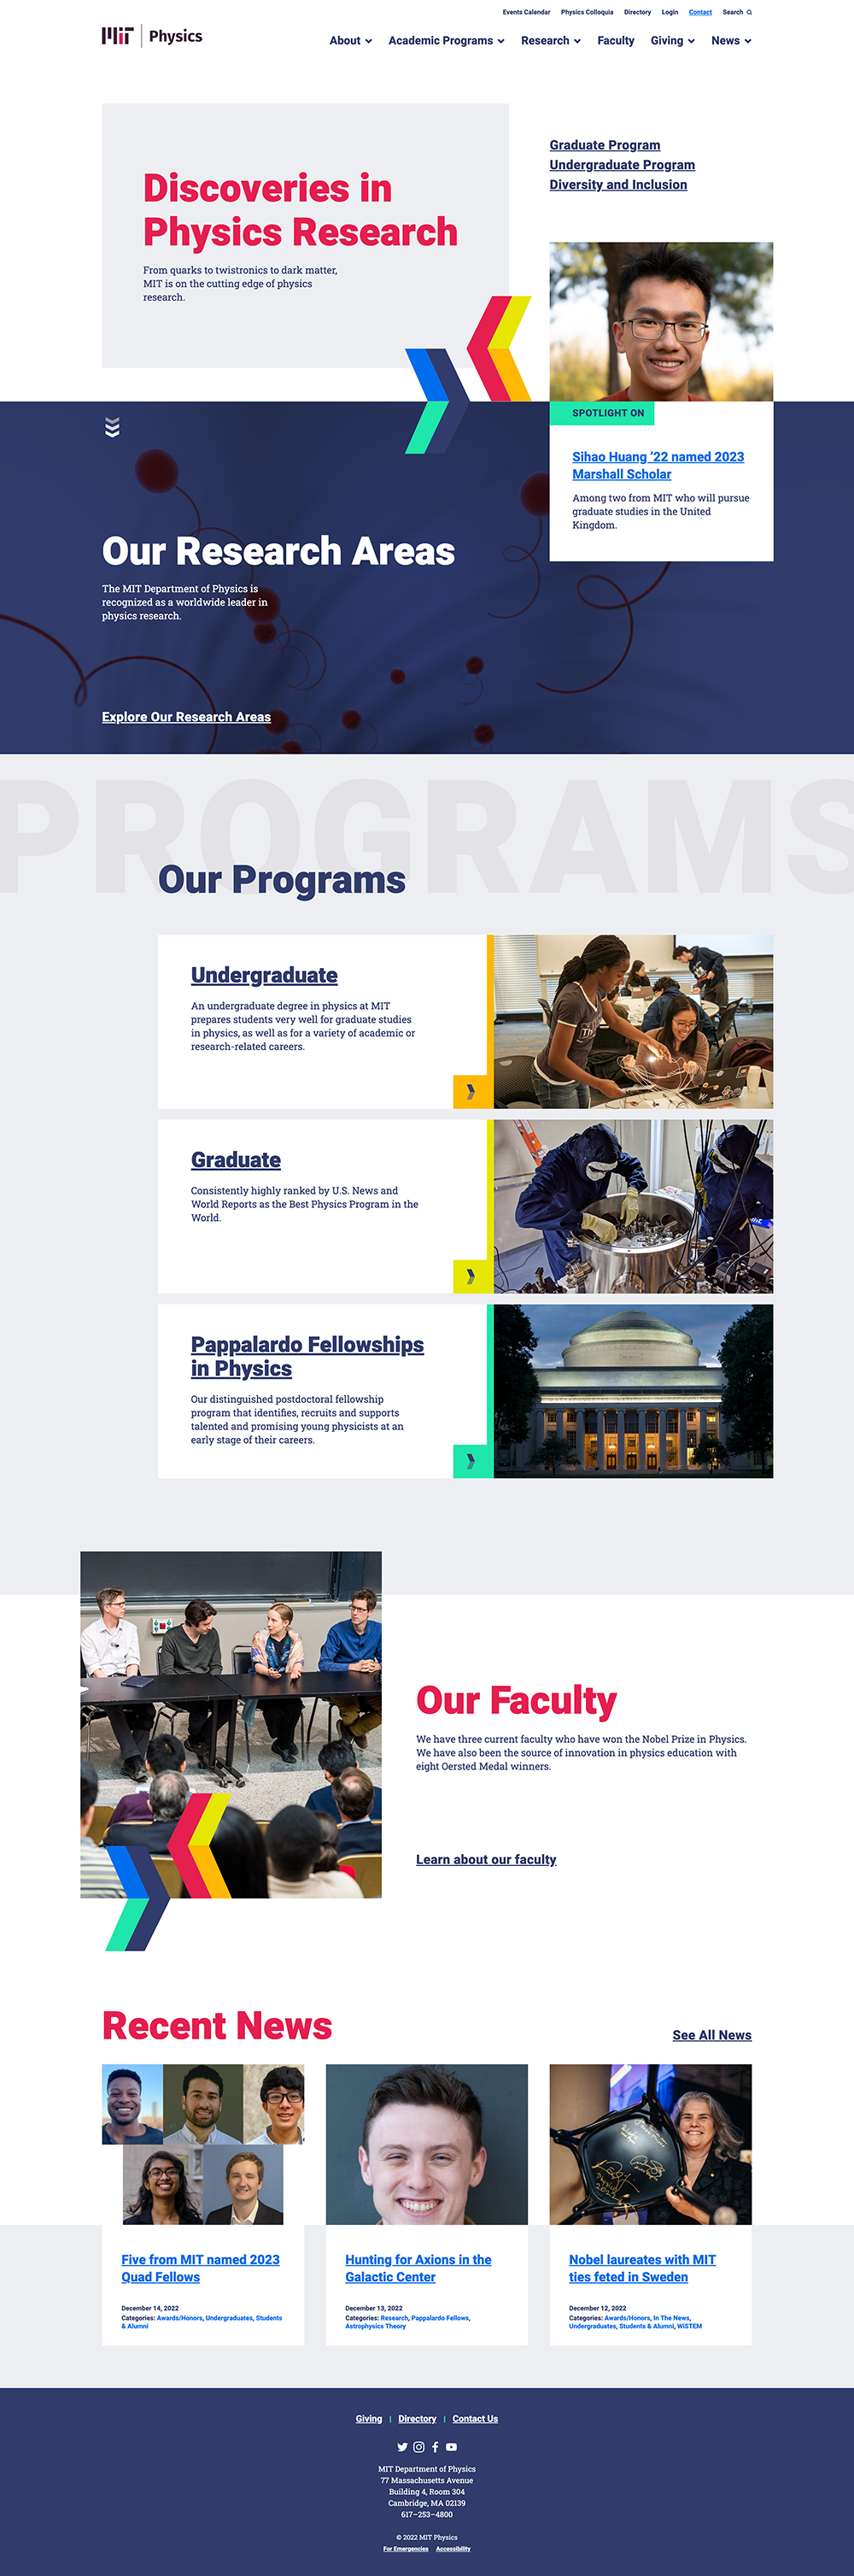 MIT Physics Homepage